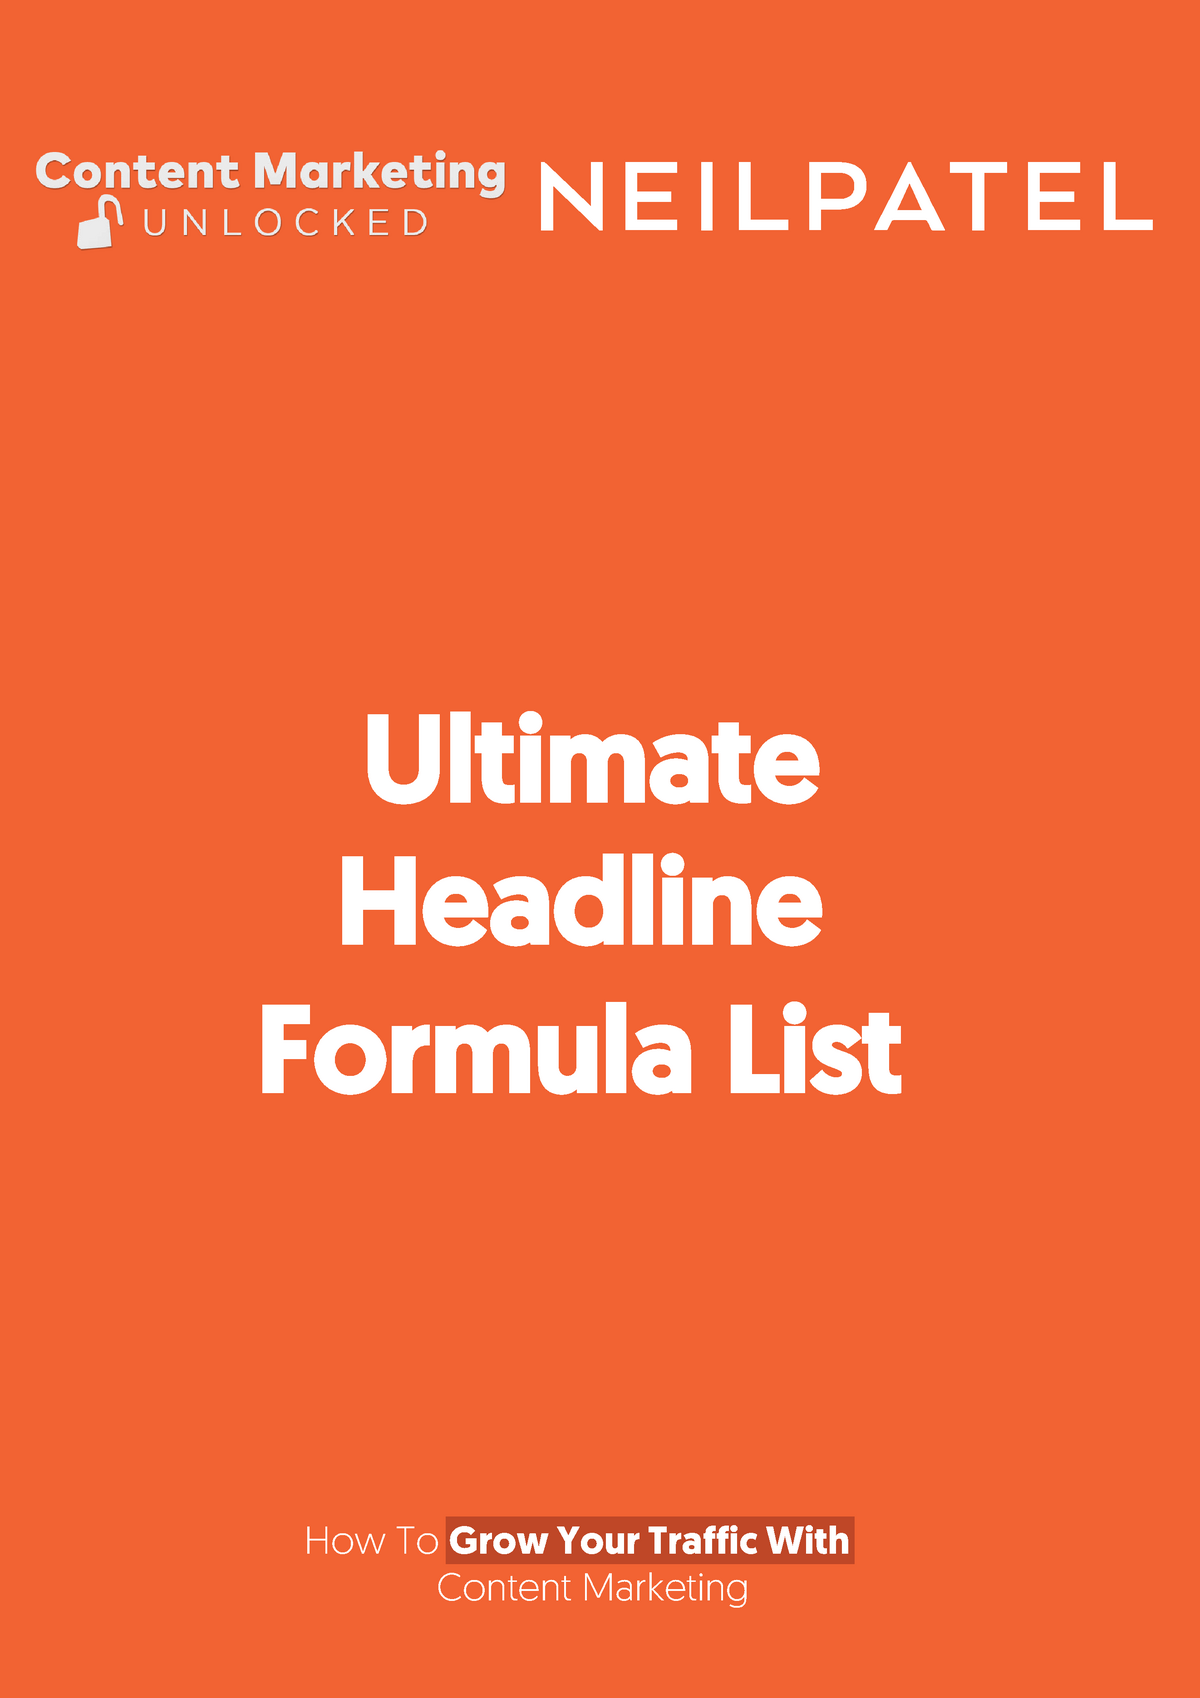 content-marketing-unlocked-headline-formula-list-mkt30018-swinburne-studocu